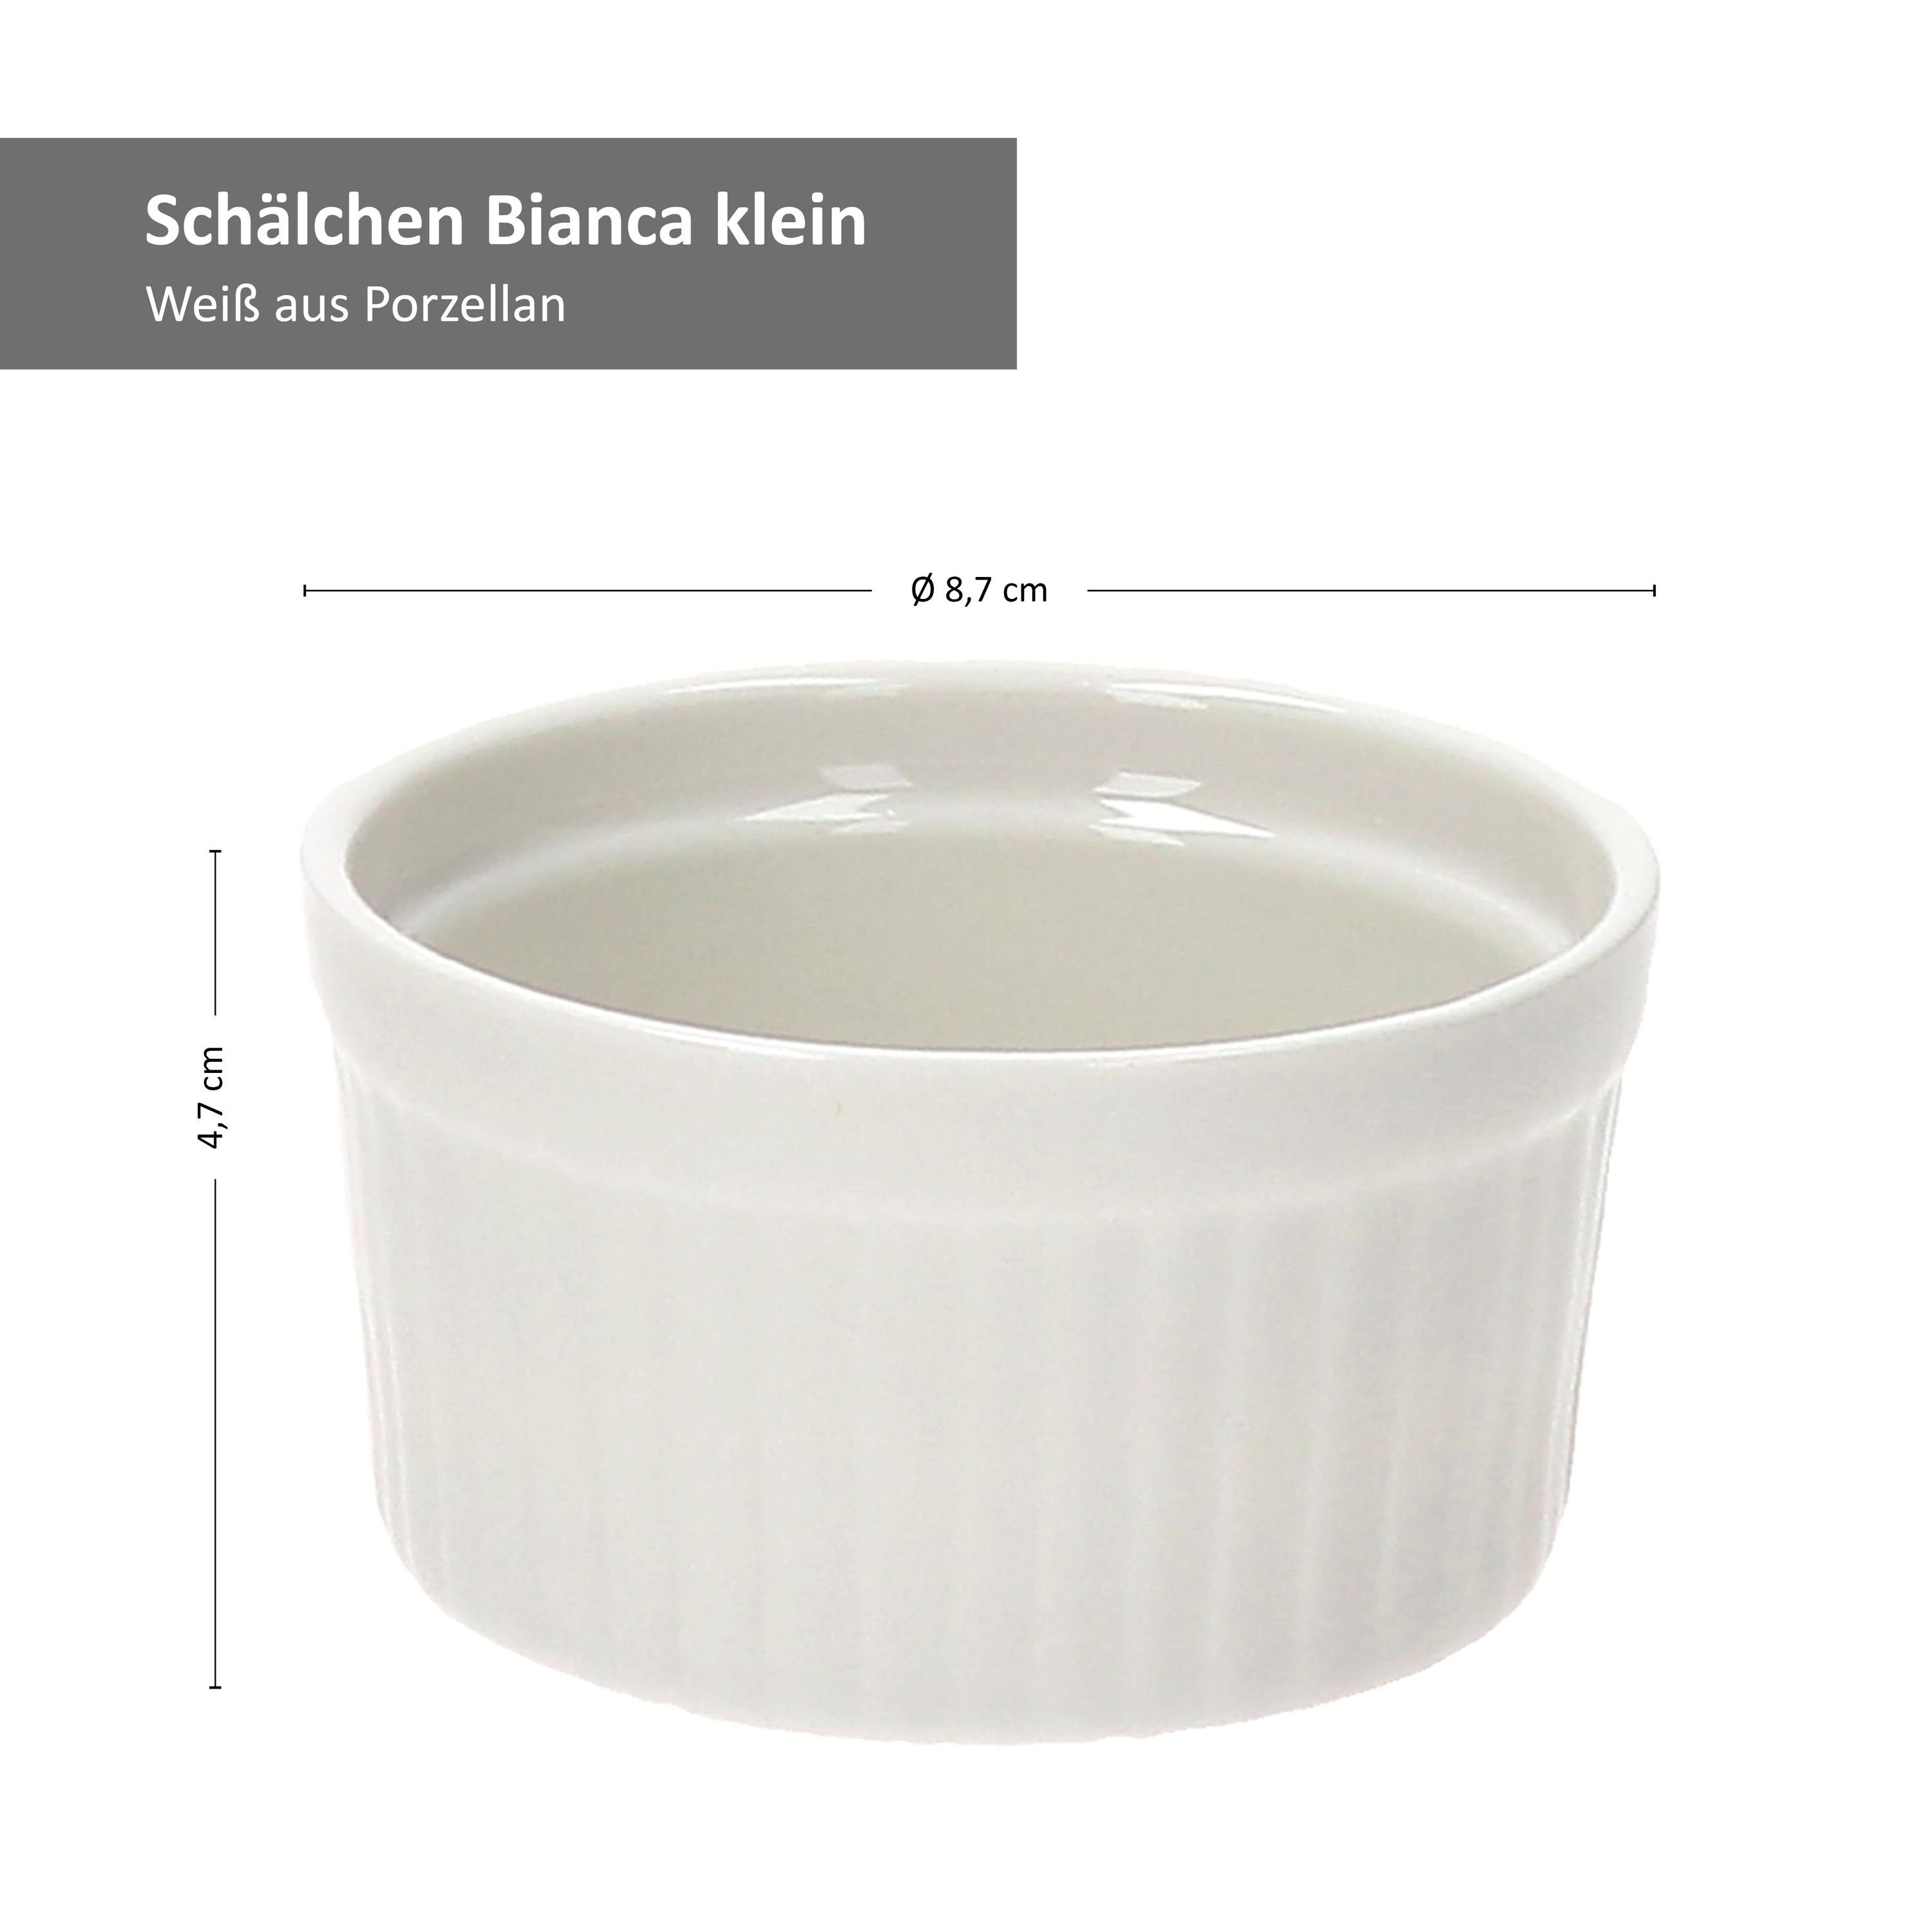 Creme MamboCat Bianca 9x5cm Porzellan Brulee 12er 24302126, Schale Servierschale Set - weiß